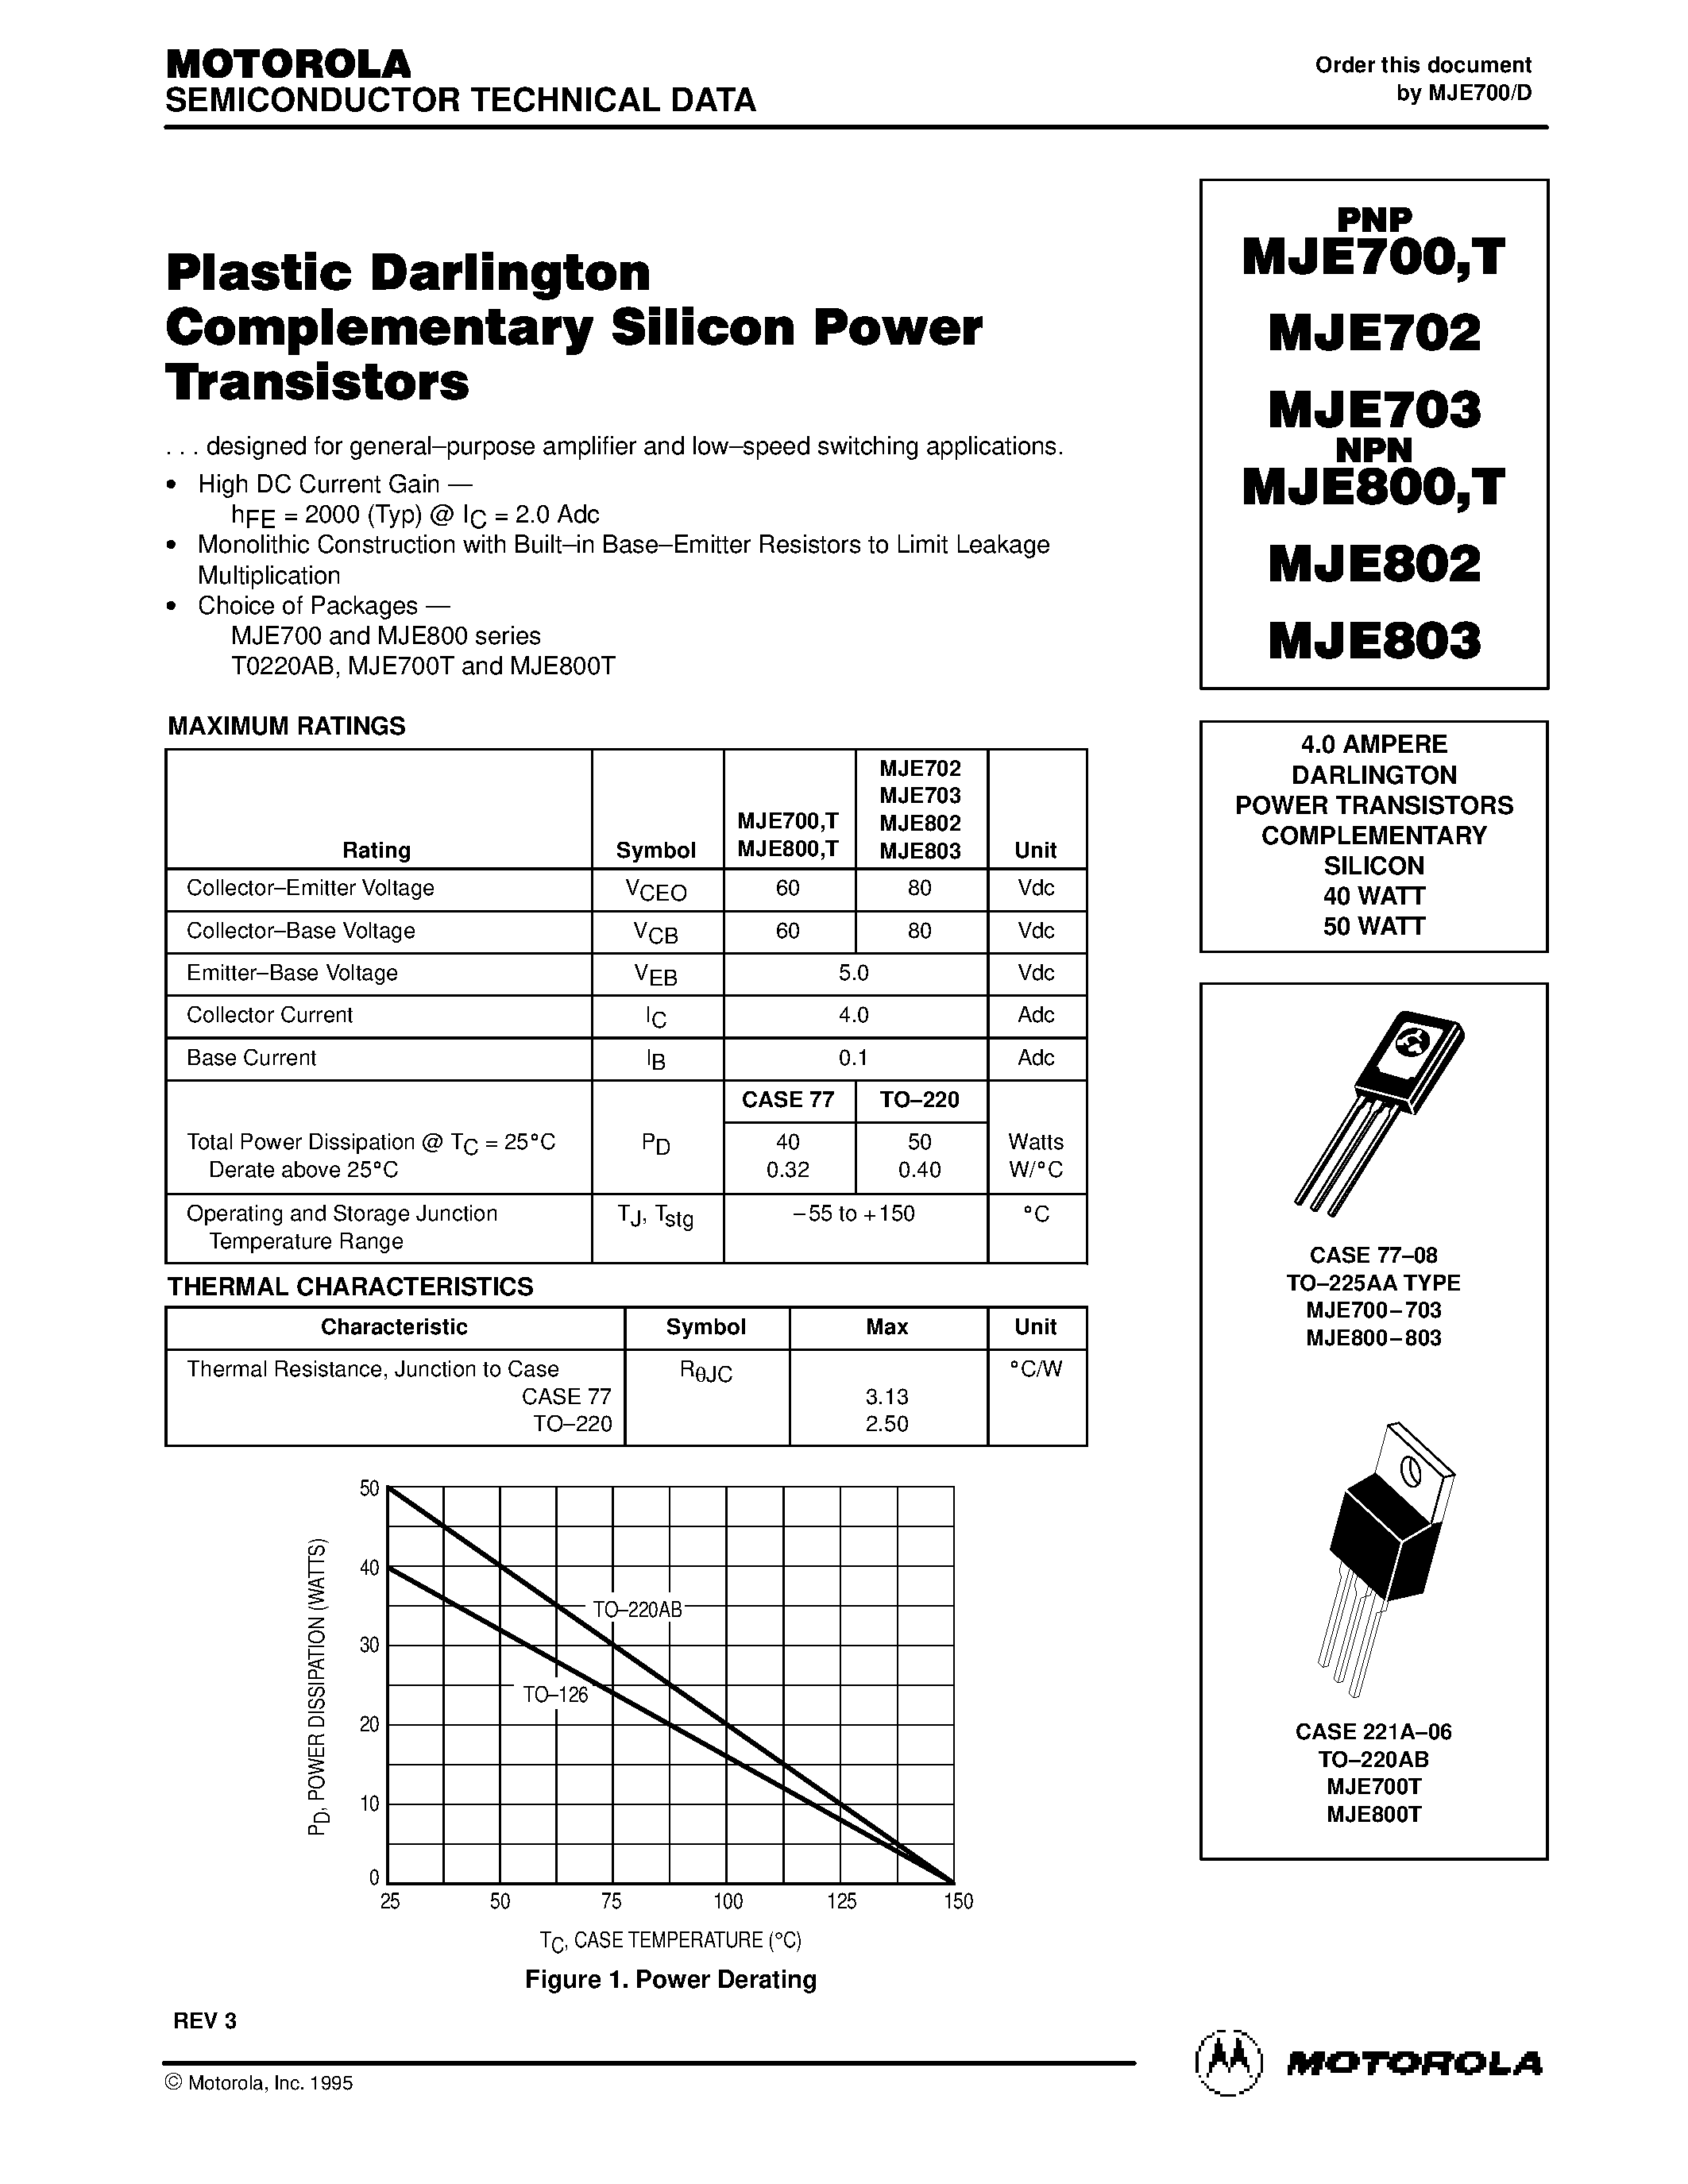 Datasheet MJE803 - 4.0 AMPERE DARLINGTON POWER TRANSISTORS COMPLEMENTARY SILICON 40 WATT 50 WATT page 1